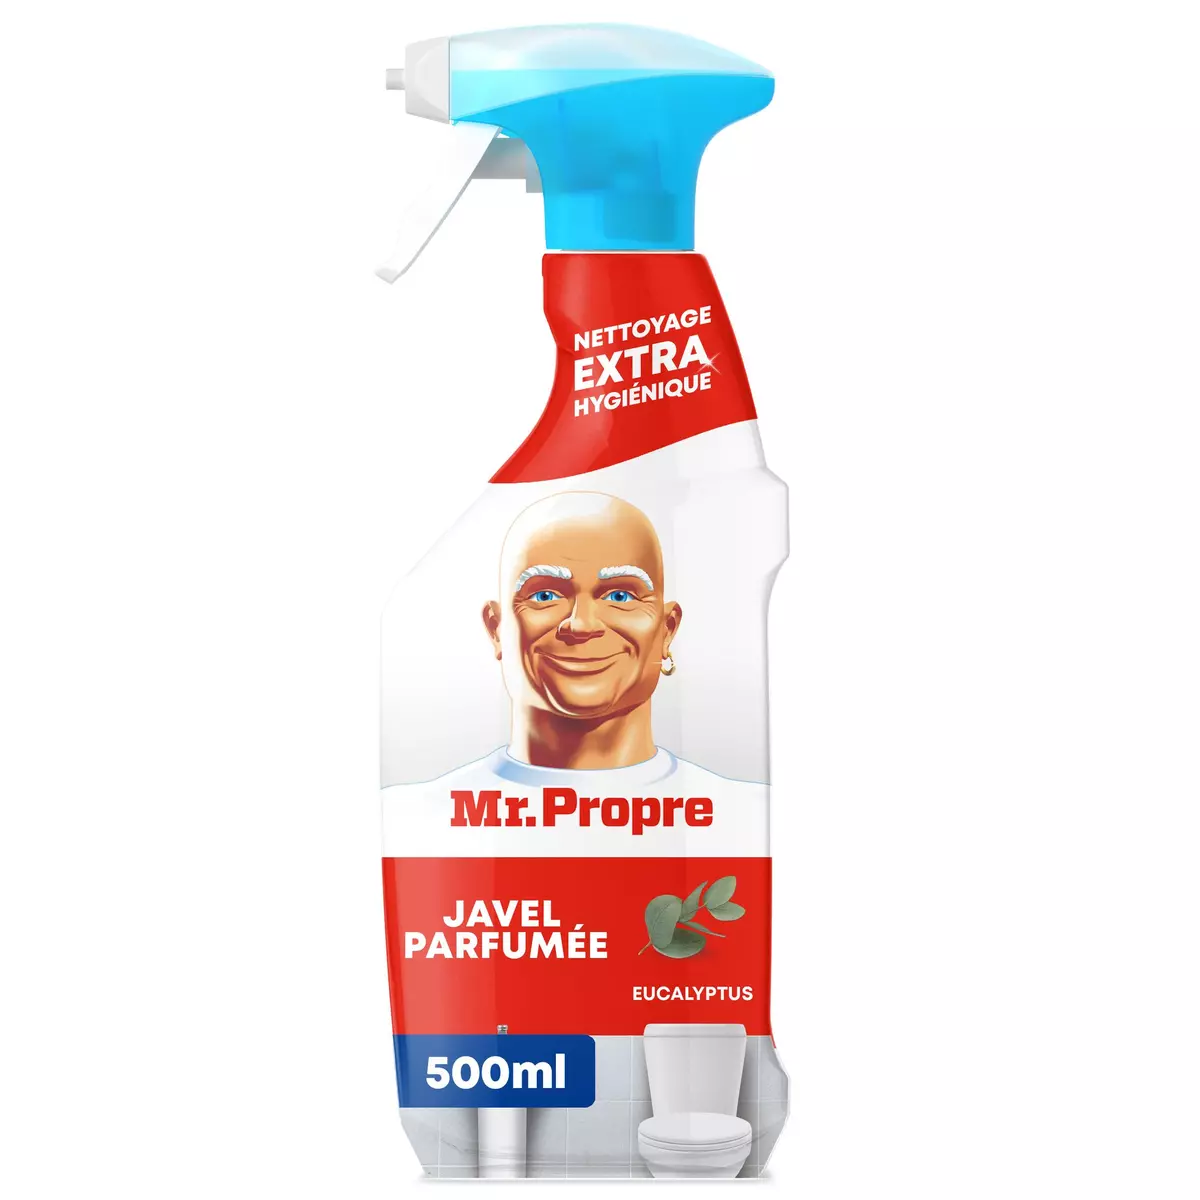 MR.PROPRE Spray javel parfumée eucalyptus 500ml